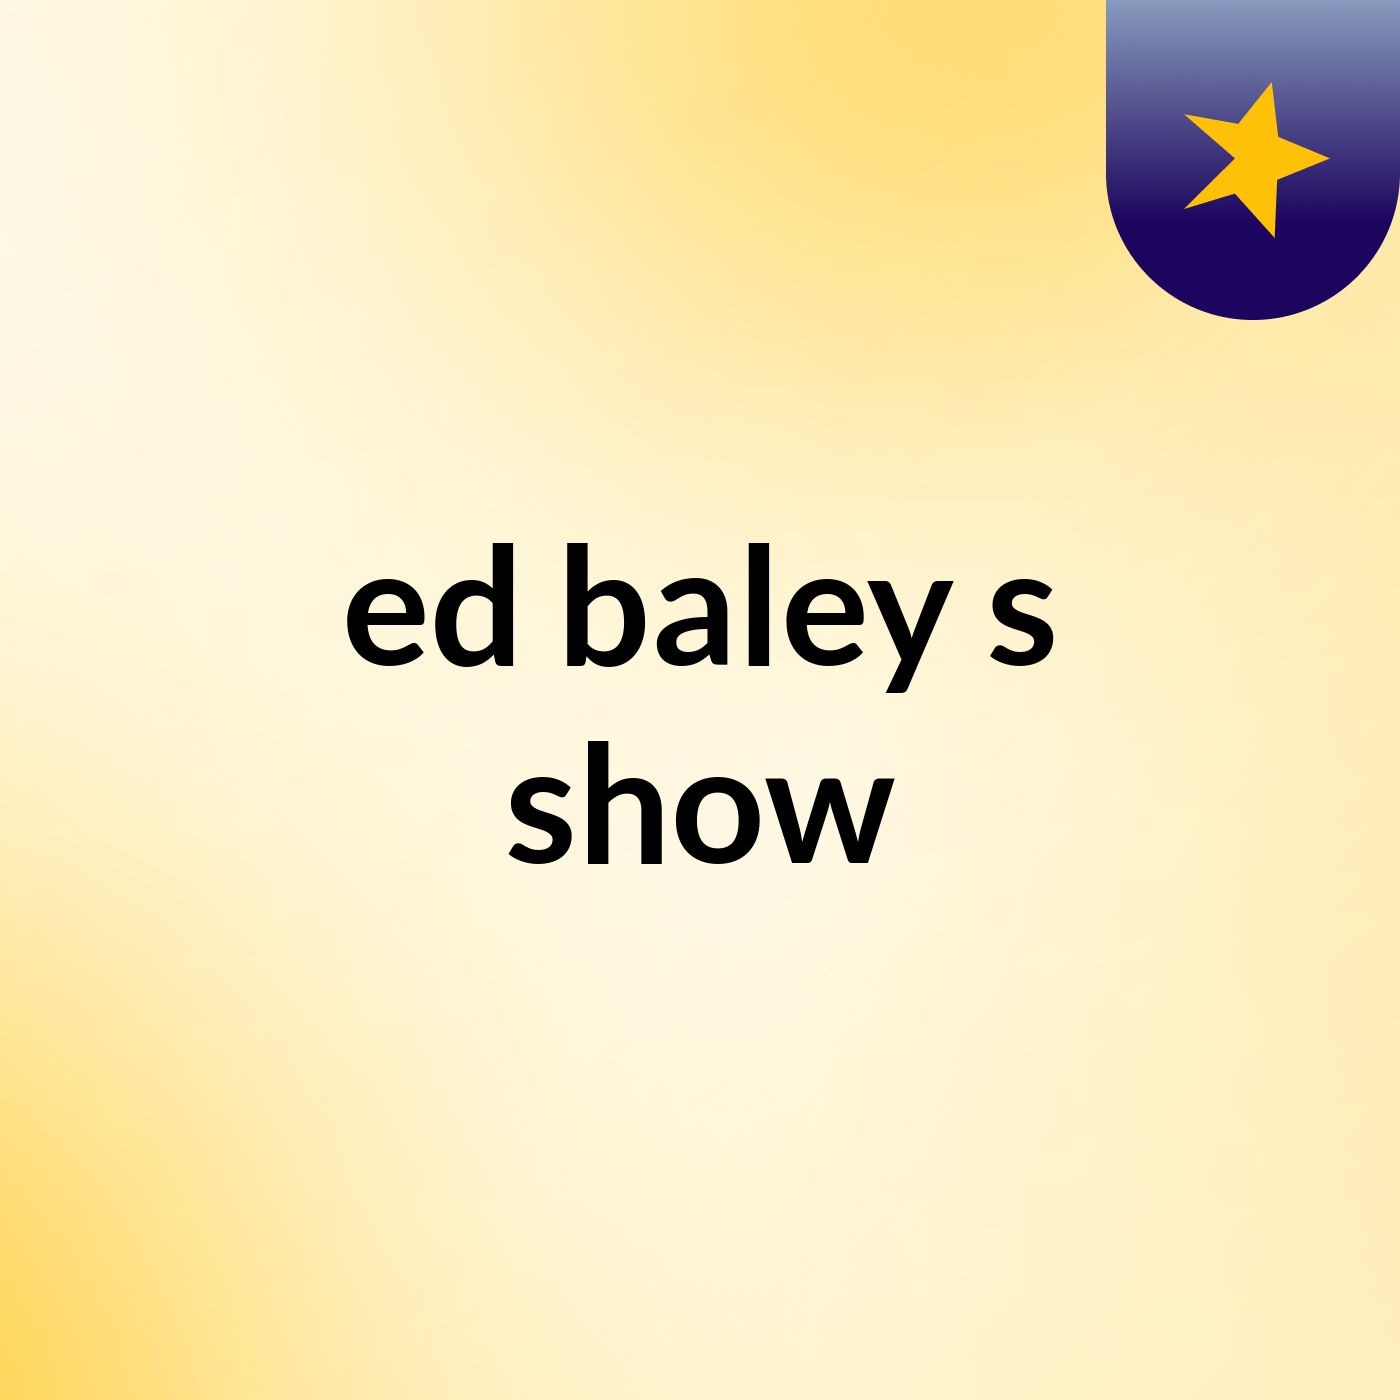 ed baley's show